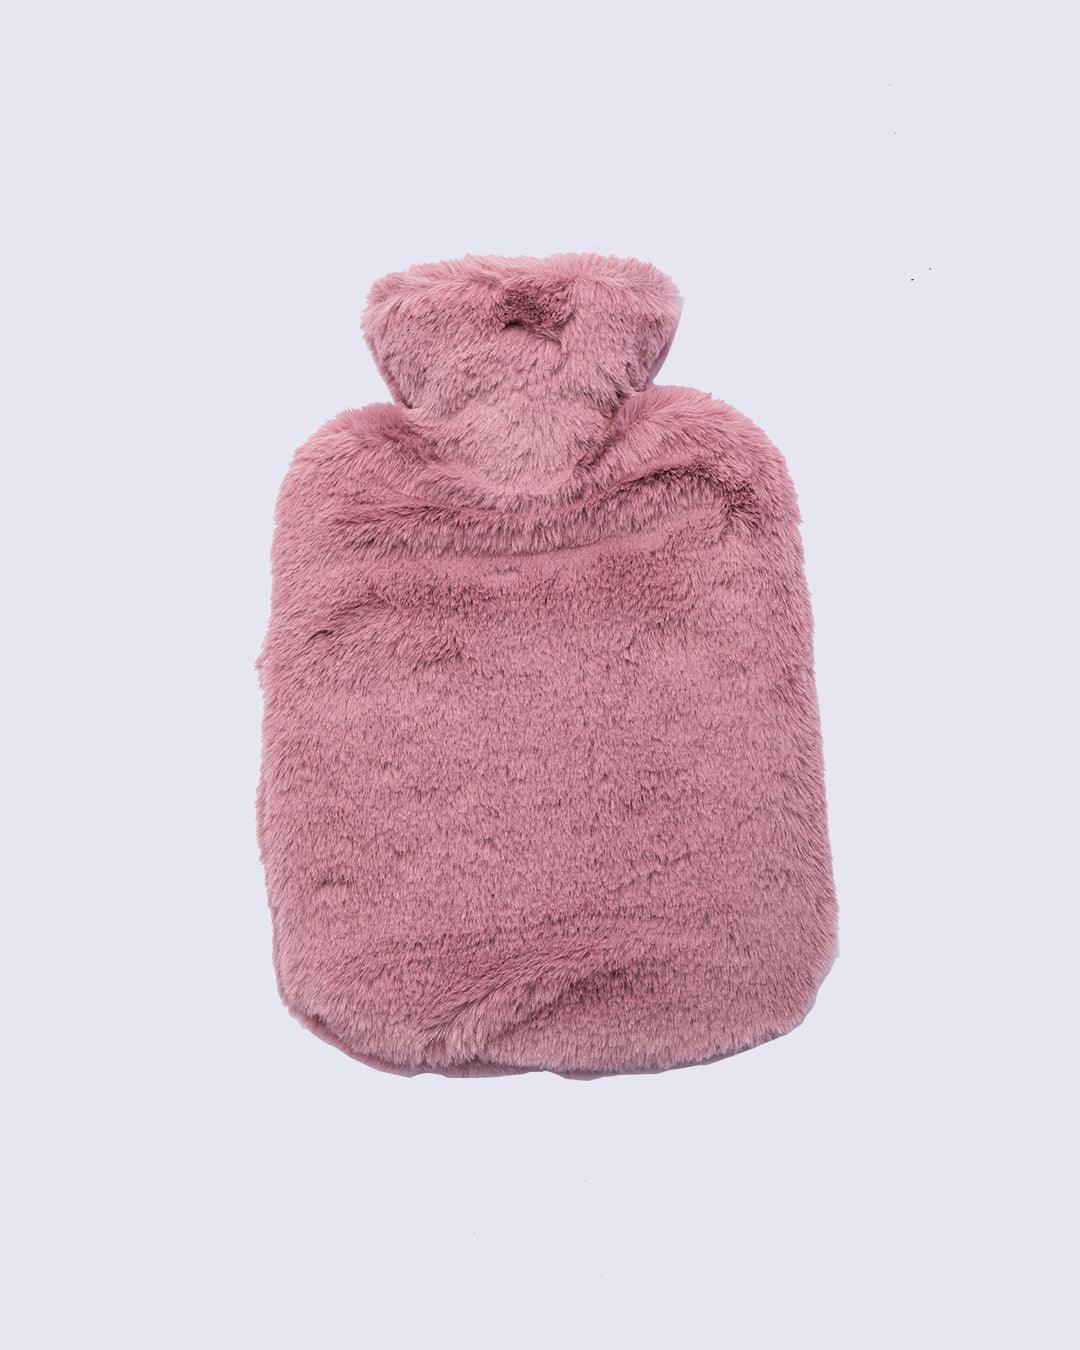 Hot Water Bag, for Pain Relief, Bunny Shaped Design, Purple, Fleece, 850 mL - MARKET 99